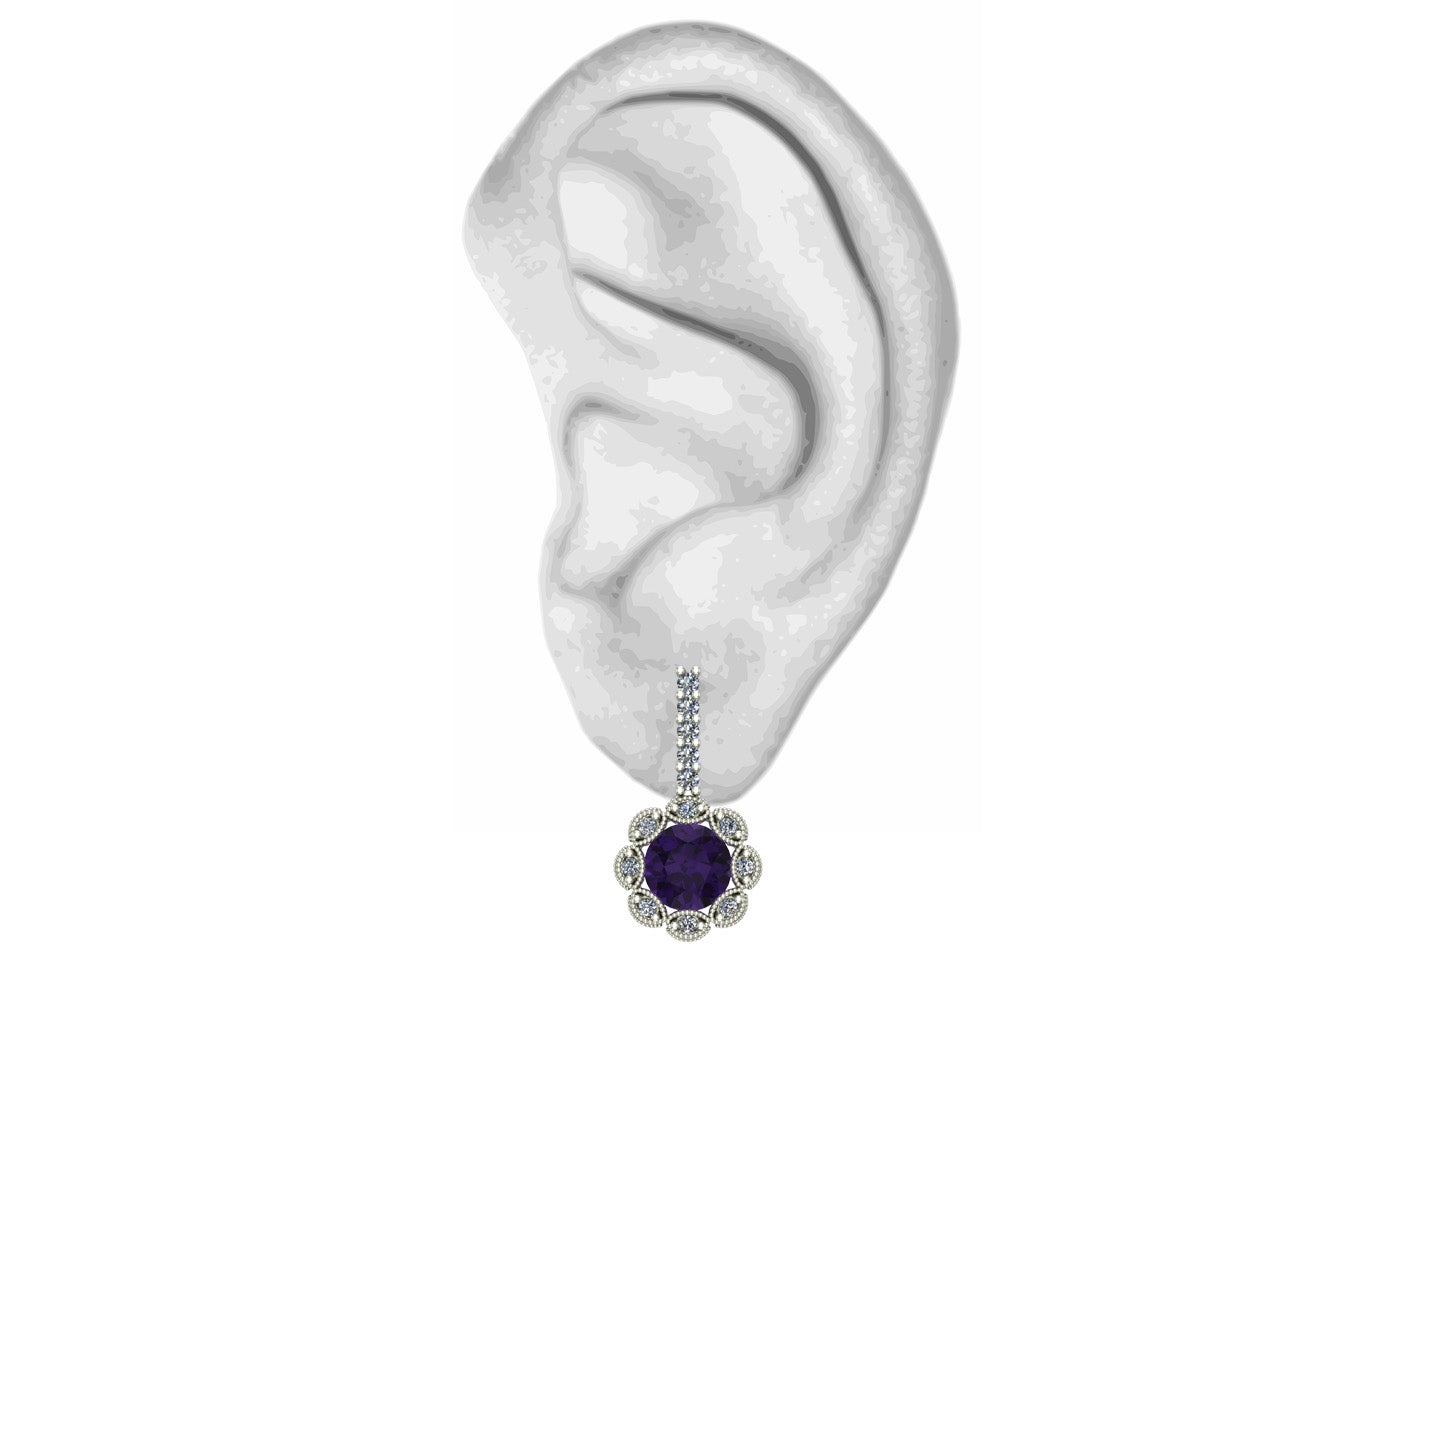 Amethyst and diamond flower earrings in 14k white gold - Charles Babb Designs - ear view